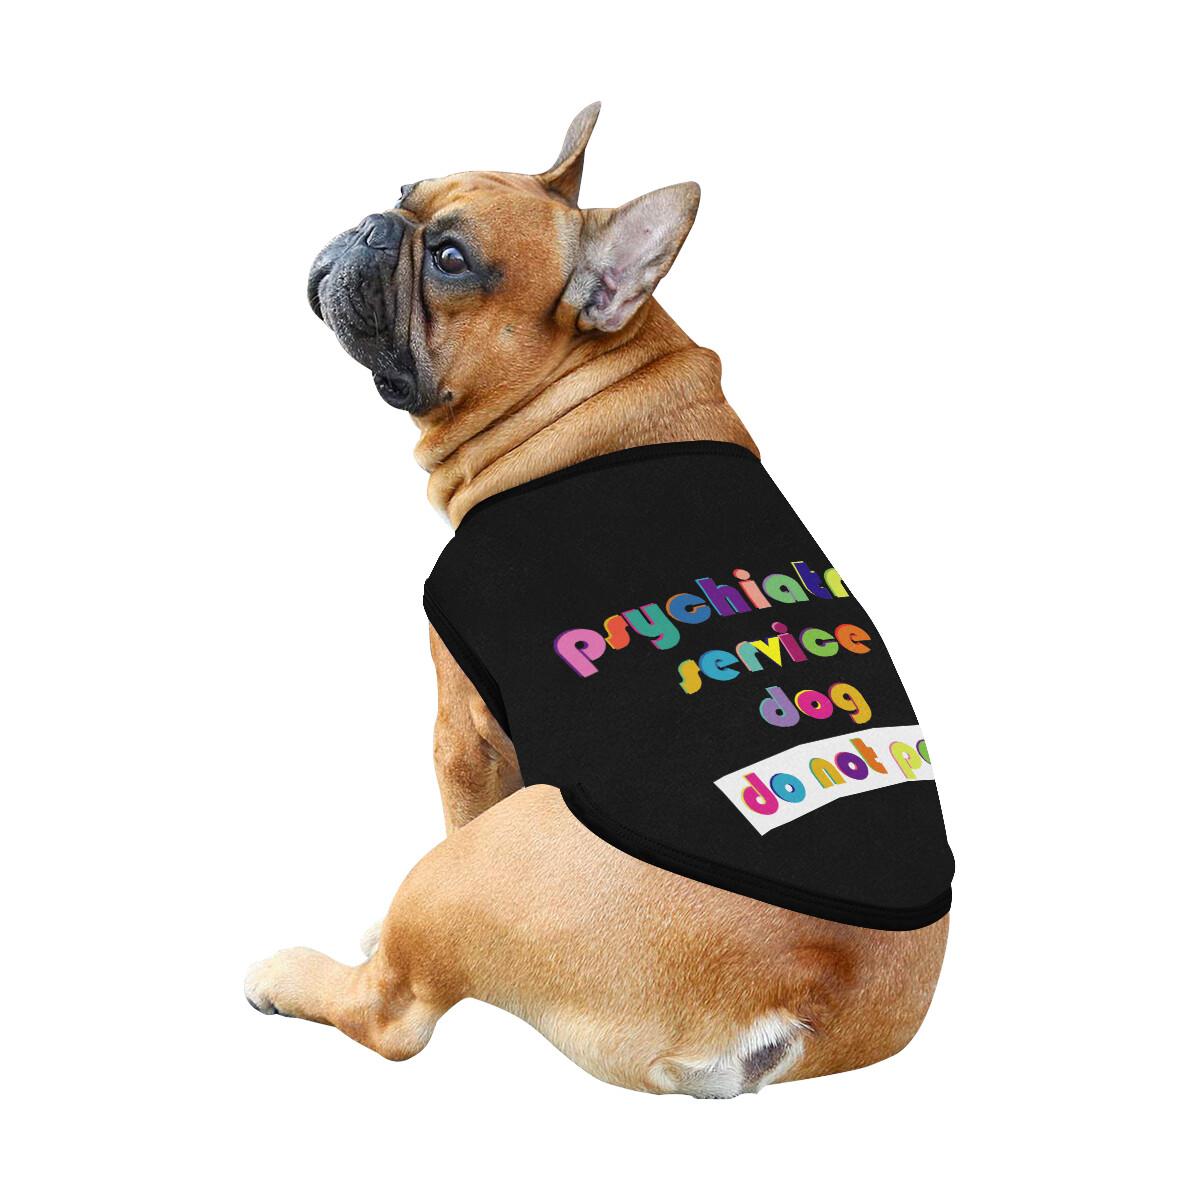 🐕 Psychiatric service dog Do not pet Dog shirt, Dog Tank Top, Dog t-shirt, Dog clothes, Gifts, front back print, 7 sizes XS to 3XL, dog gifts, black